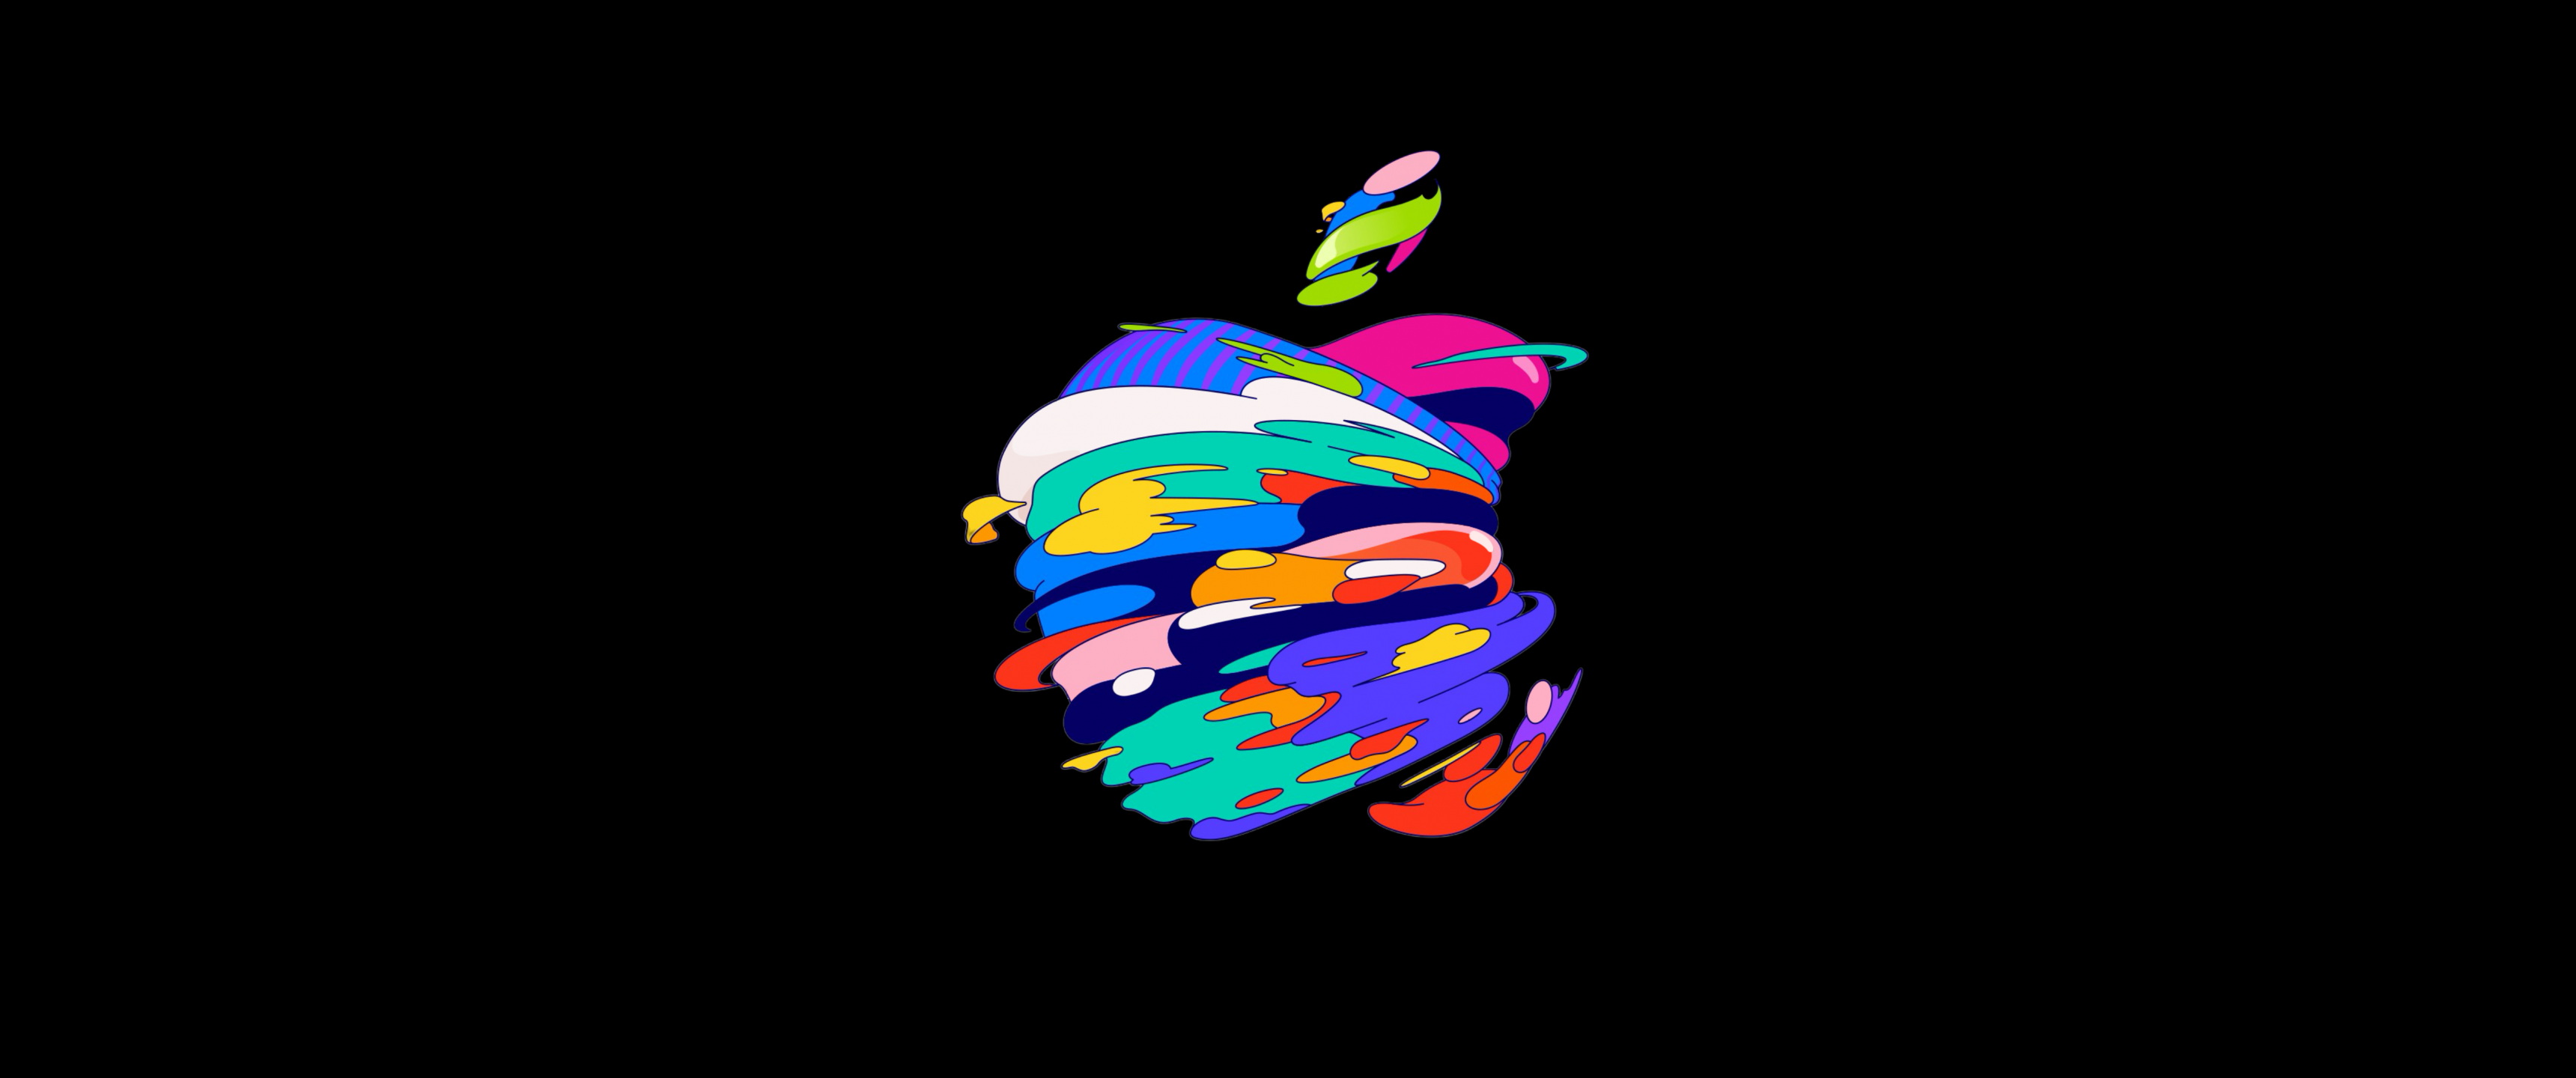 Apple logo Wallpaper 4K, Mac, Black background, Technology, #7971